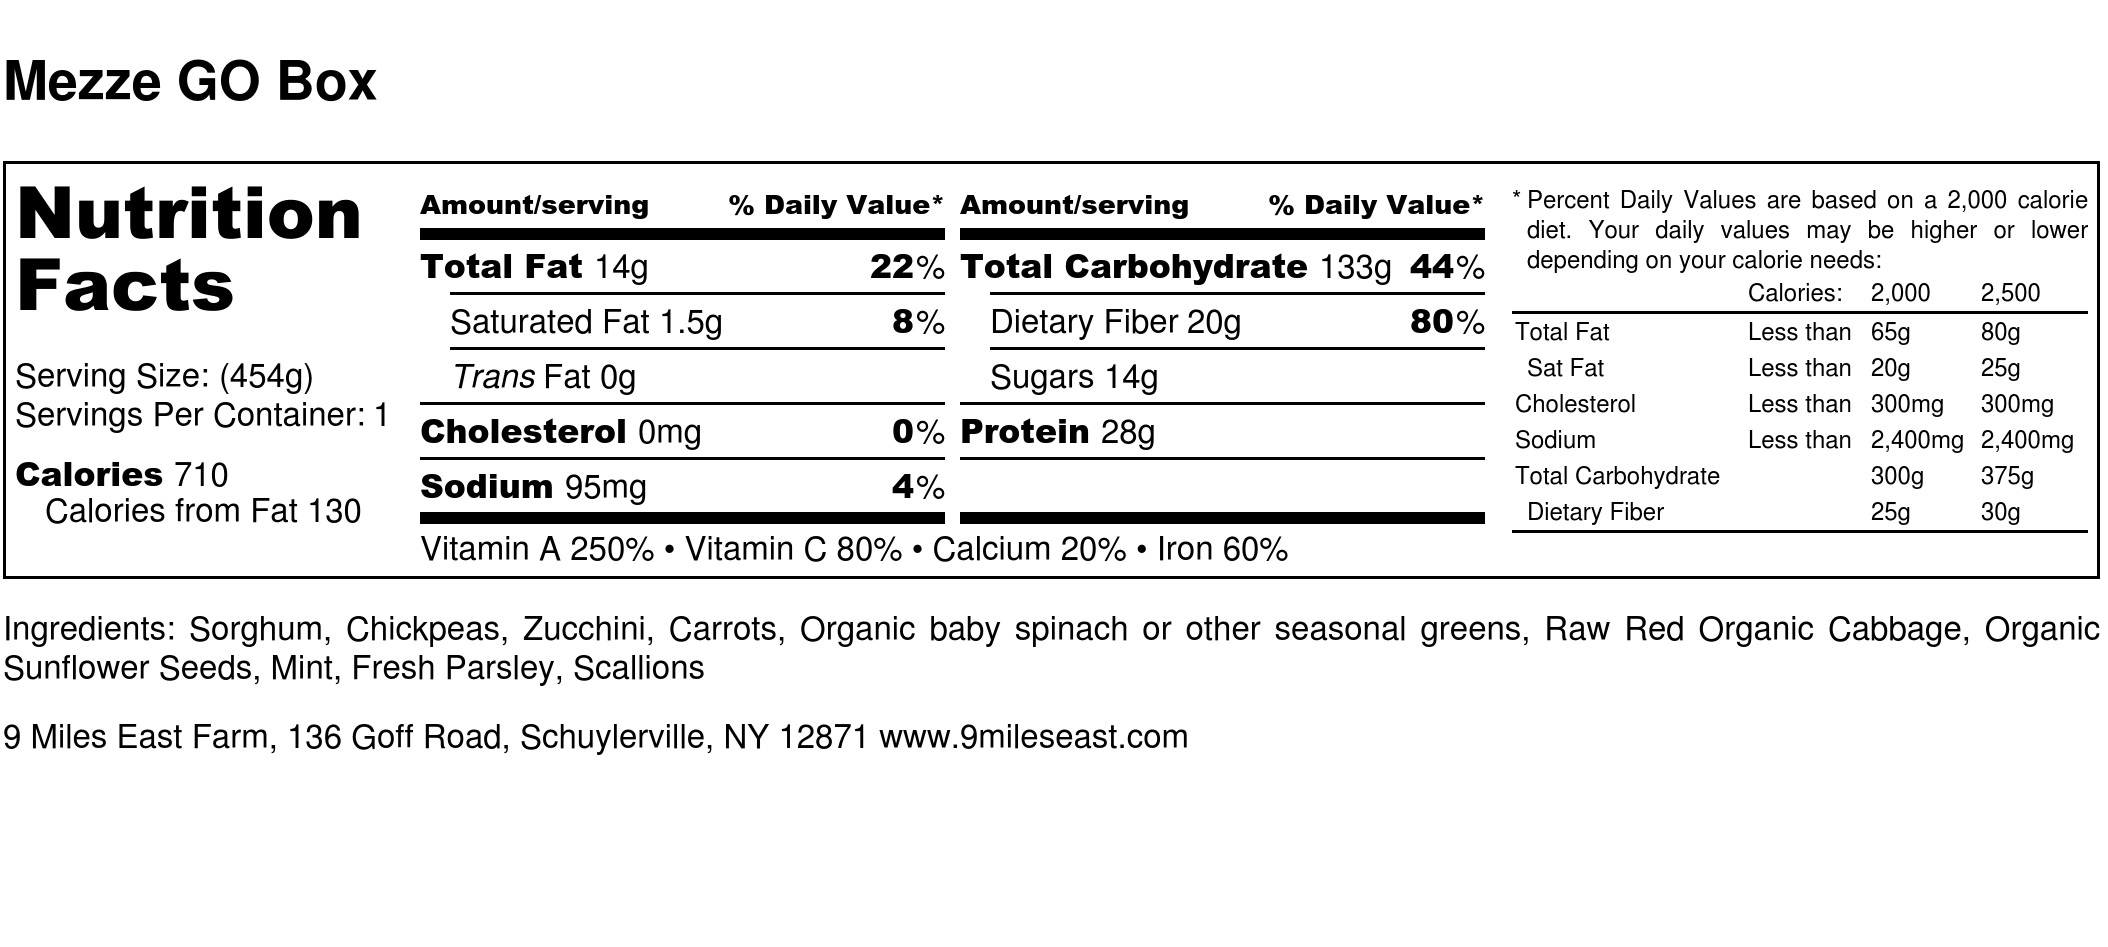 Mezze GO Box - Nutrition Label.jpg